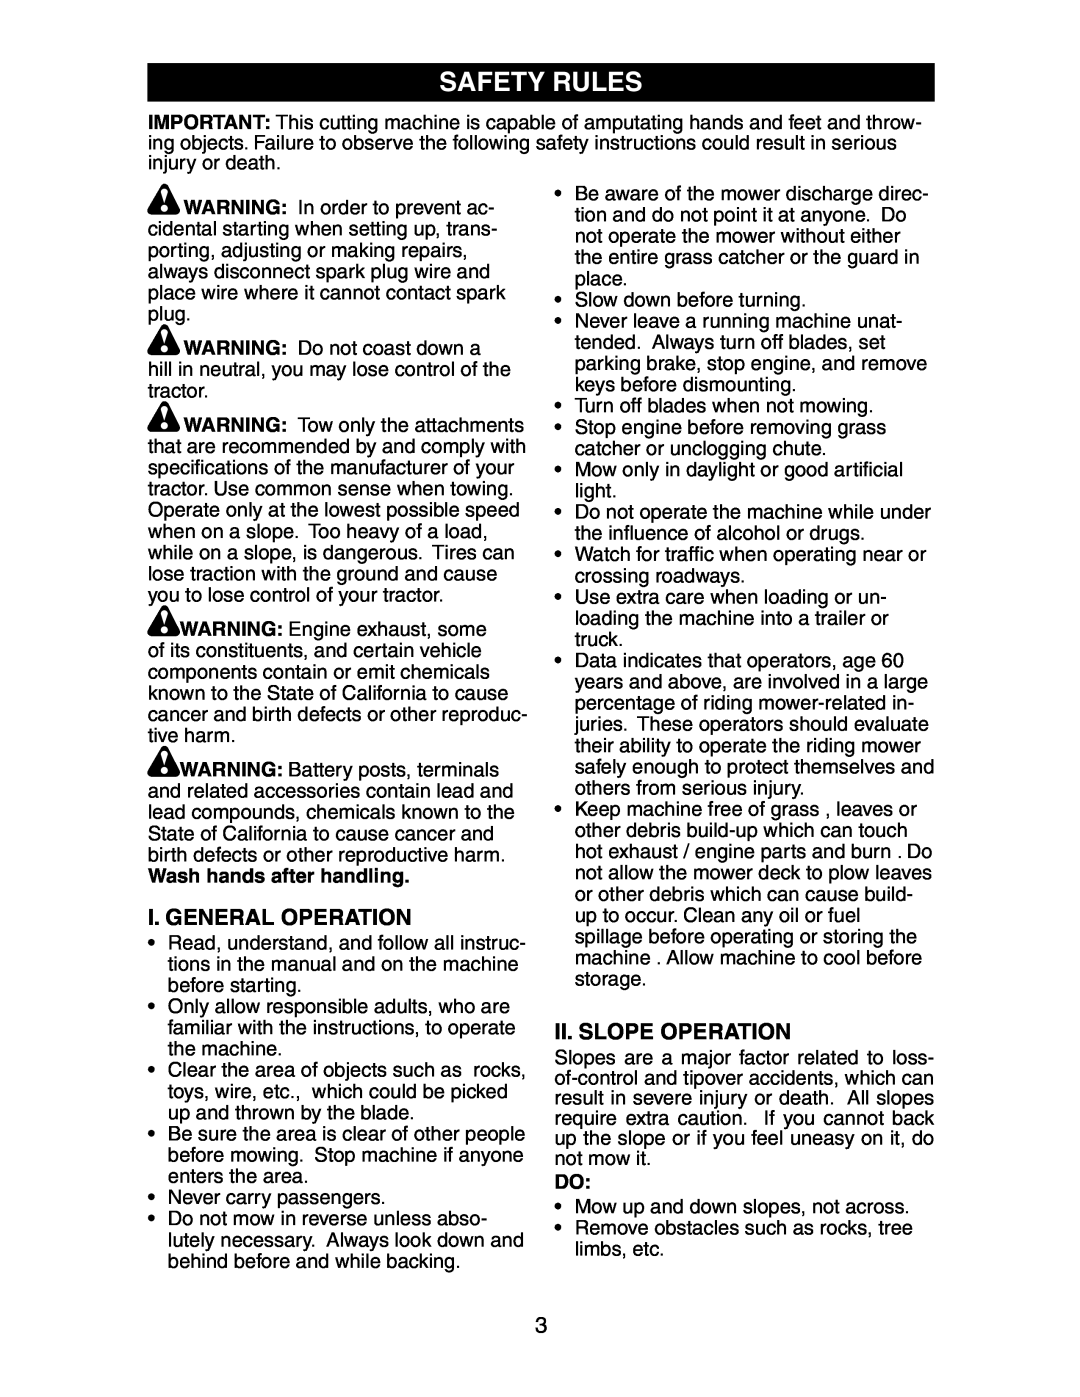 Poulan CO1842STA manual Safety Rules, I. General Operation, Ii. Slope Operation, Wash hands after handling 